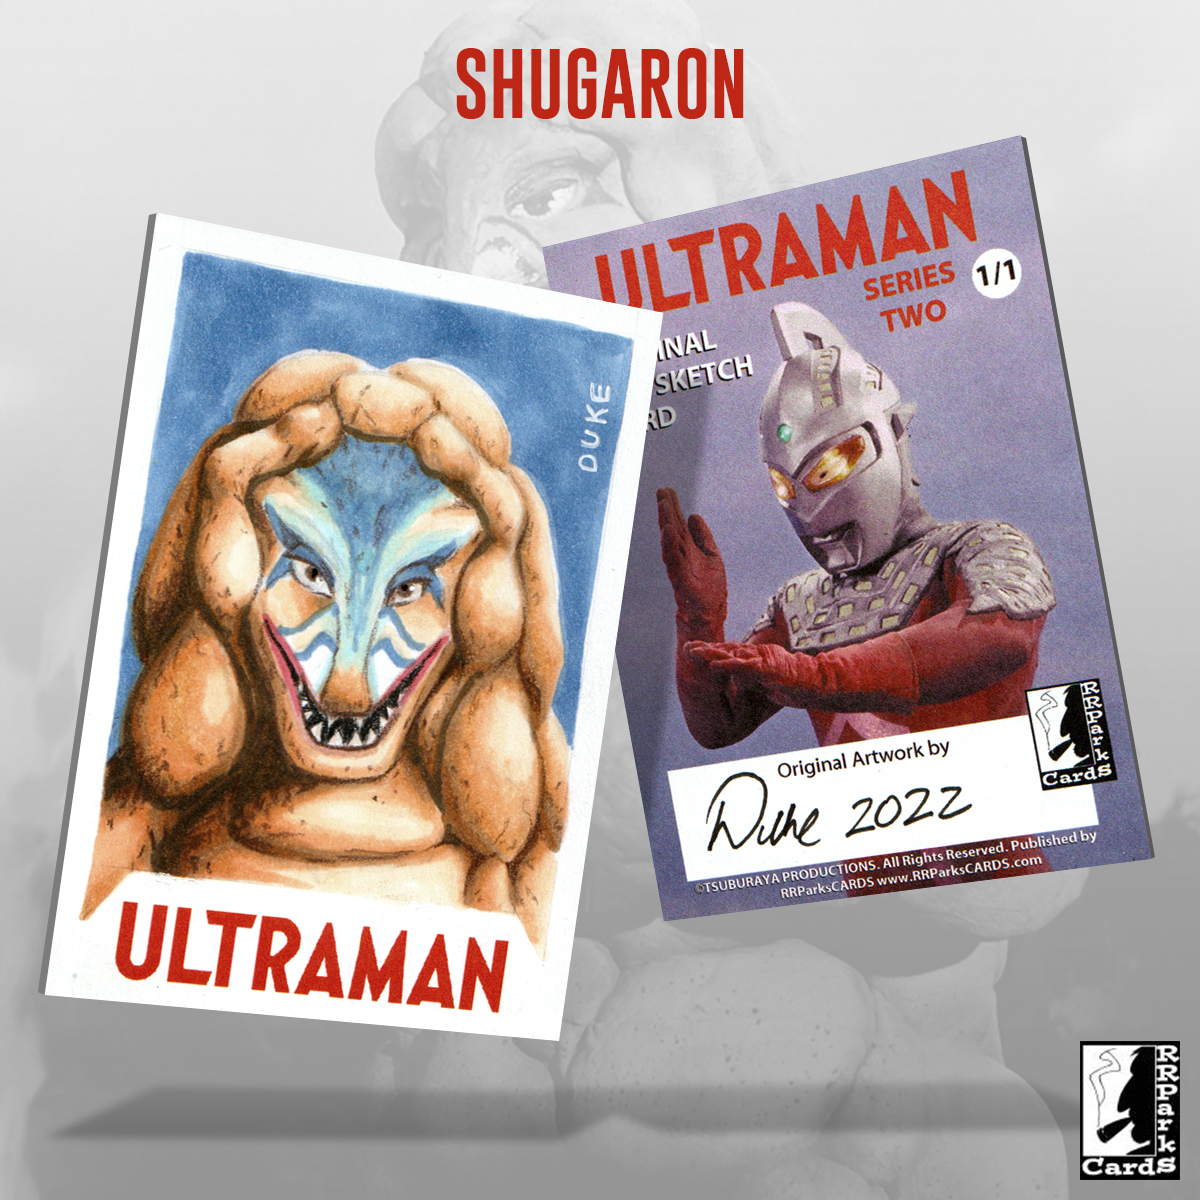 Ultraman Series 2 Shugaron Sketch Card by Duke